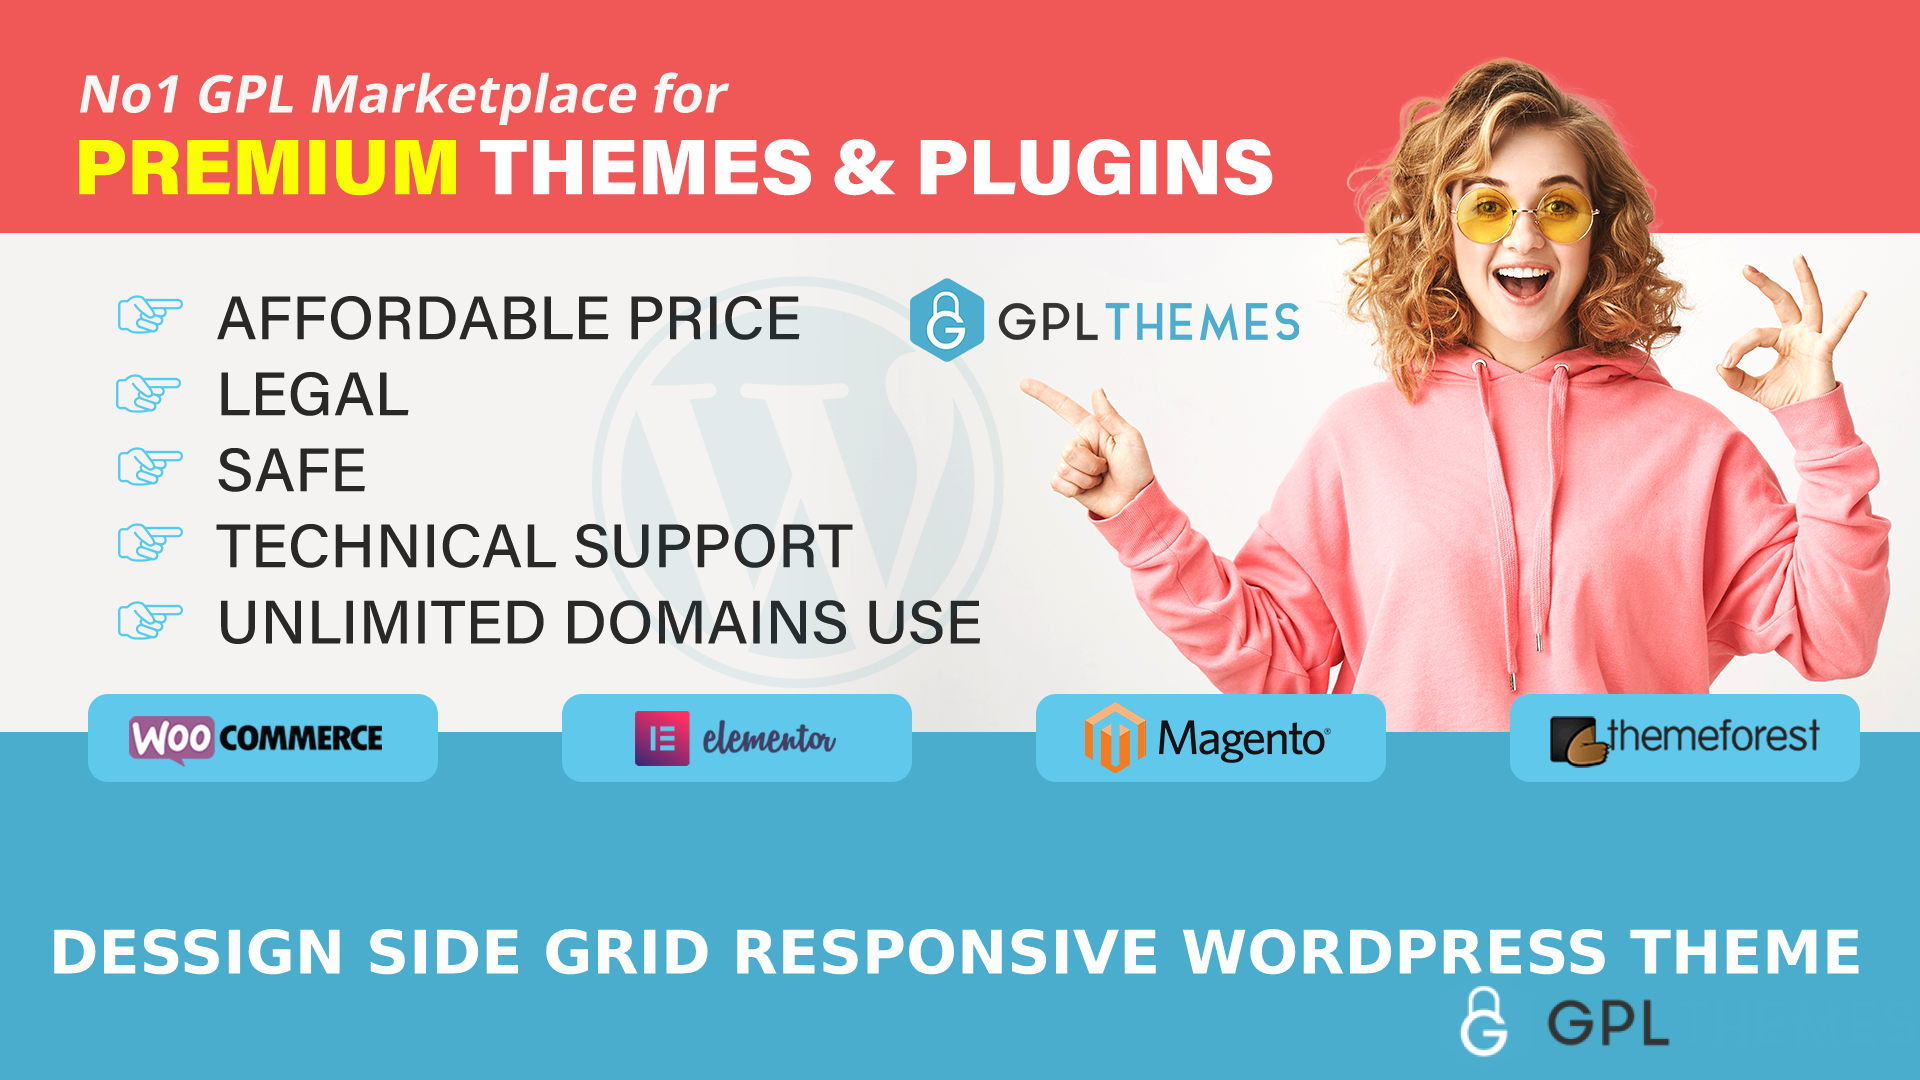 Dessign Side Grid Responsive WordPress Theme